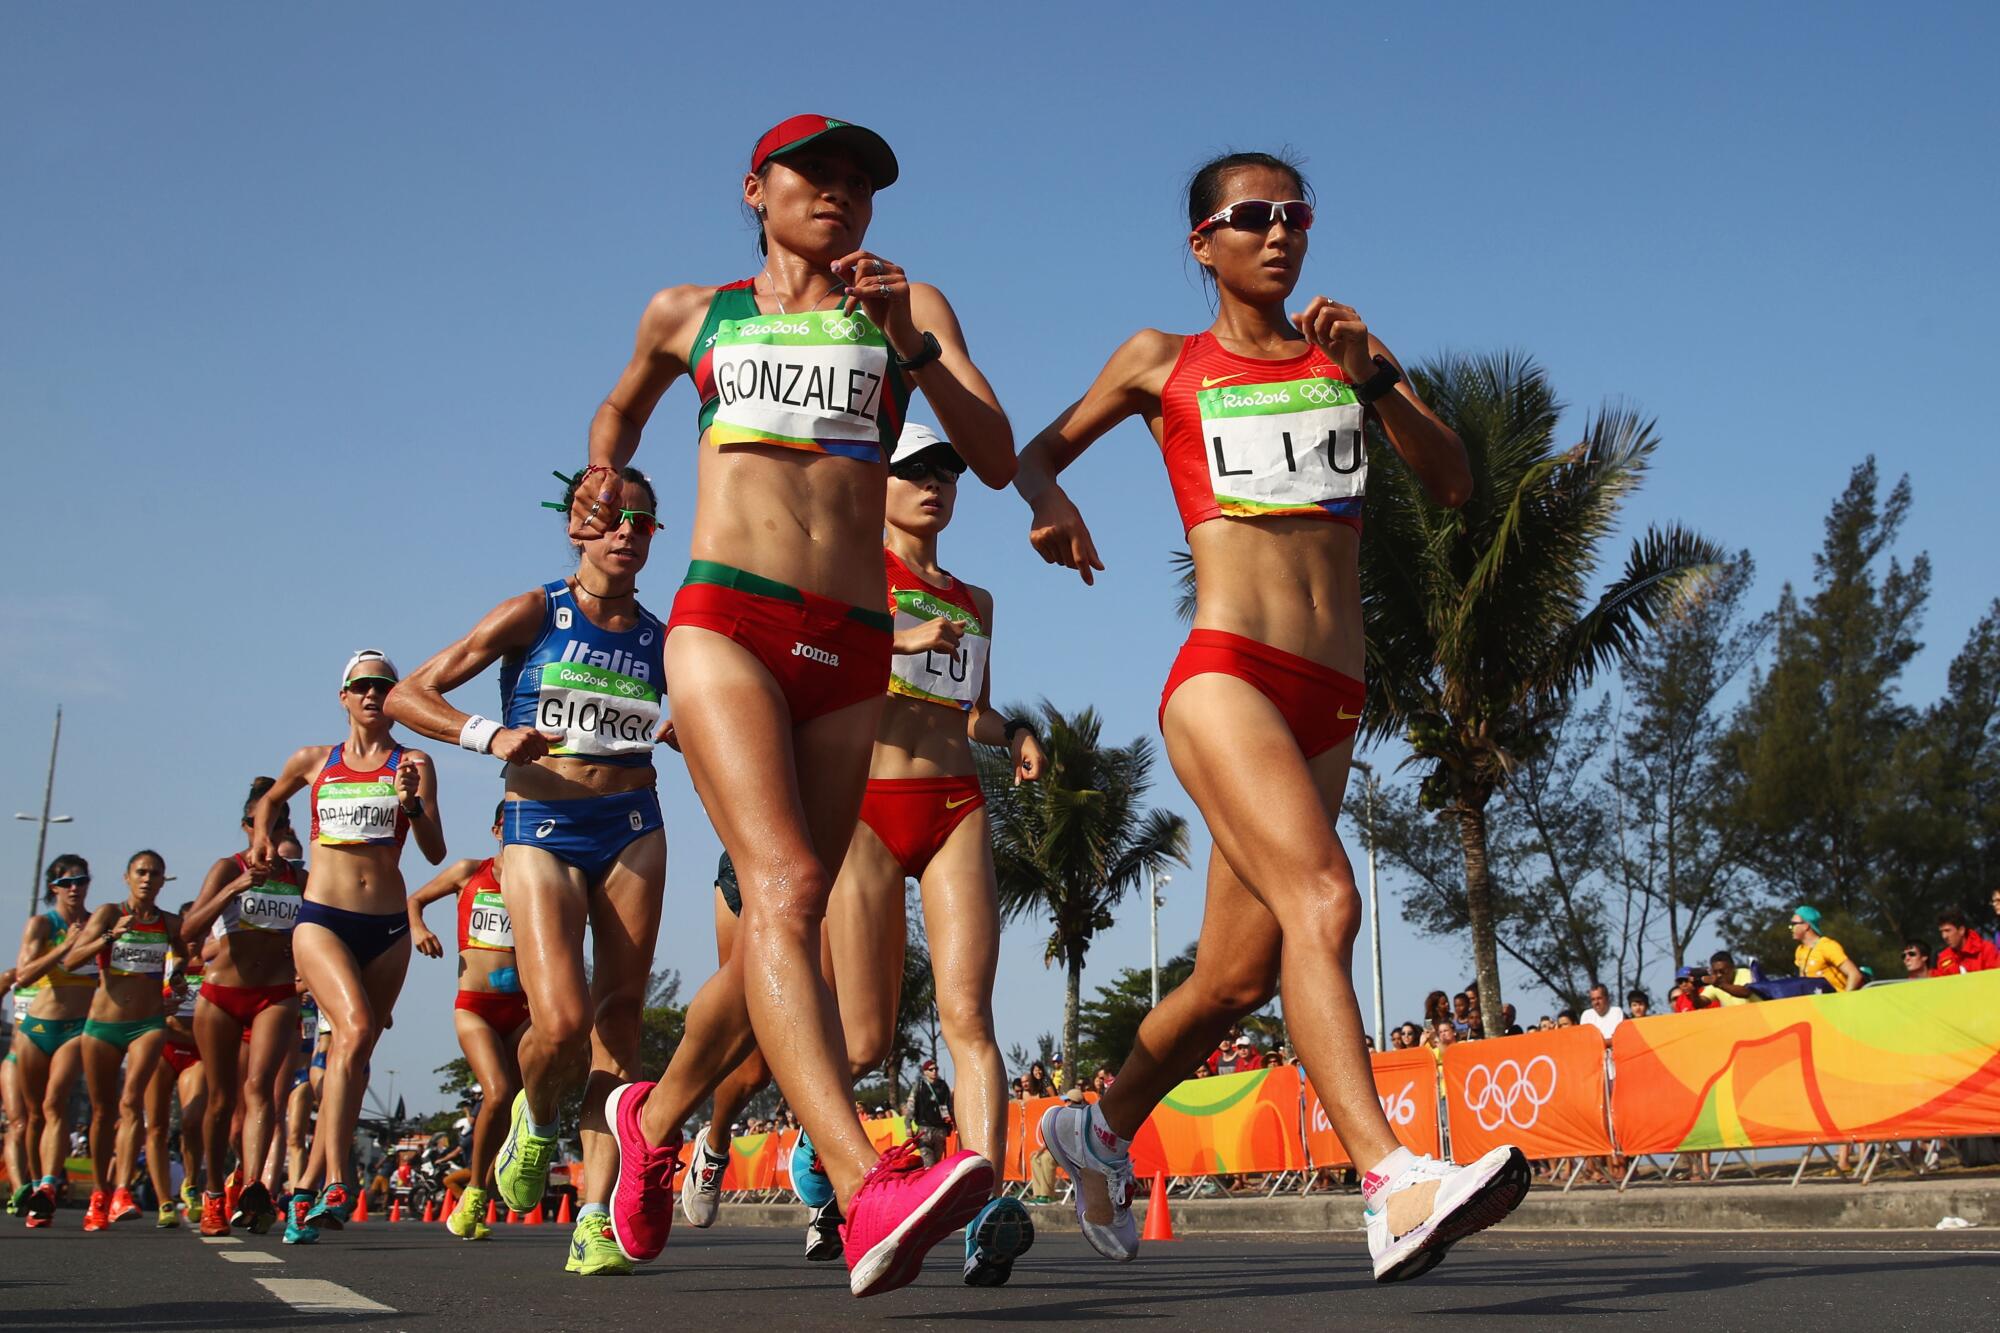  Women's 20-kilometer racewalk final at the 2016 Rio Olympics.